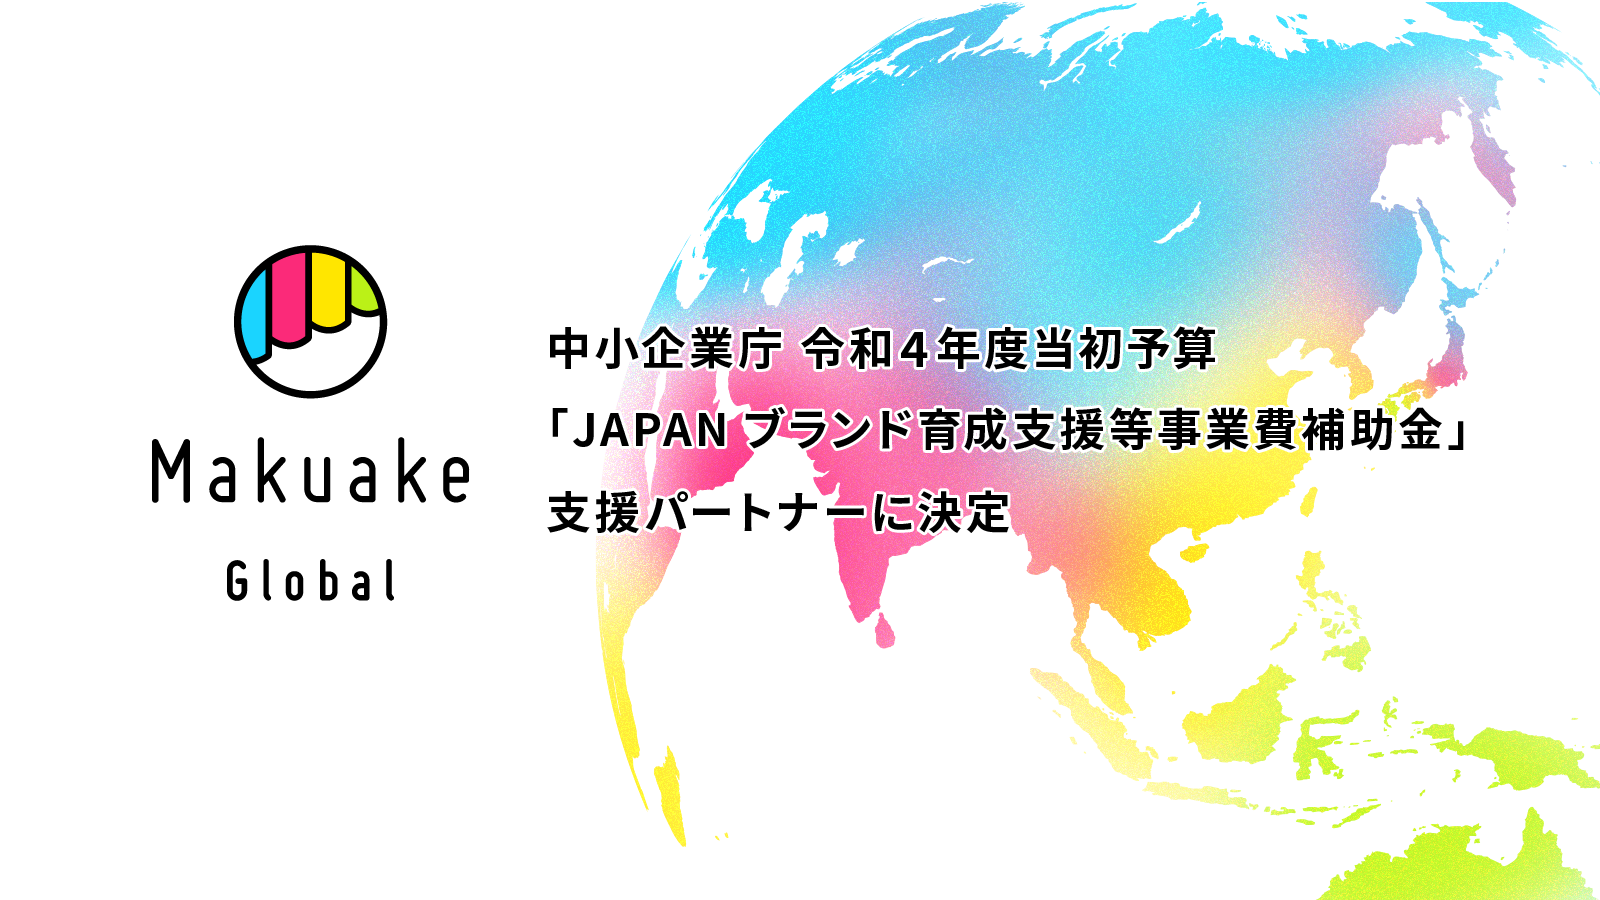 Makuake Global が 中小企業庁の令和４年度当初予算 Japanブランド育成支援等事業費補助金 の支援 パートナーに決定 株式会社マクアケのプレスリリース